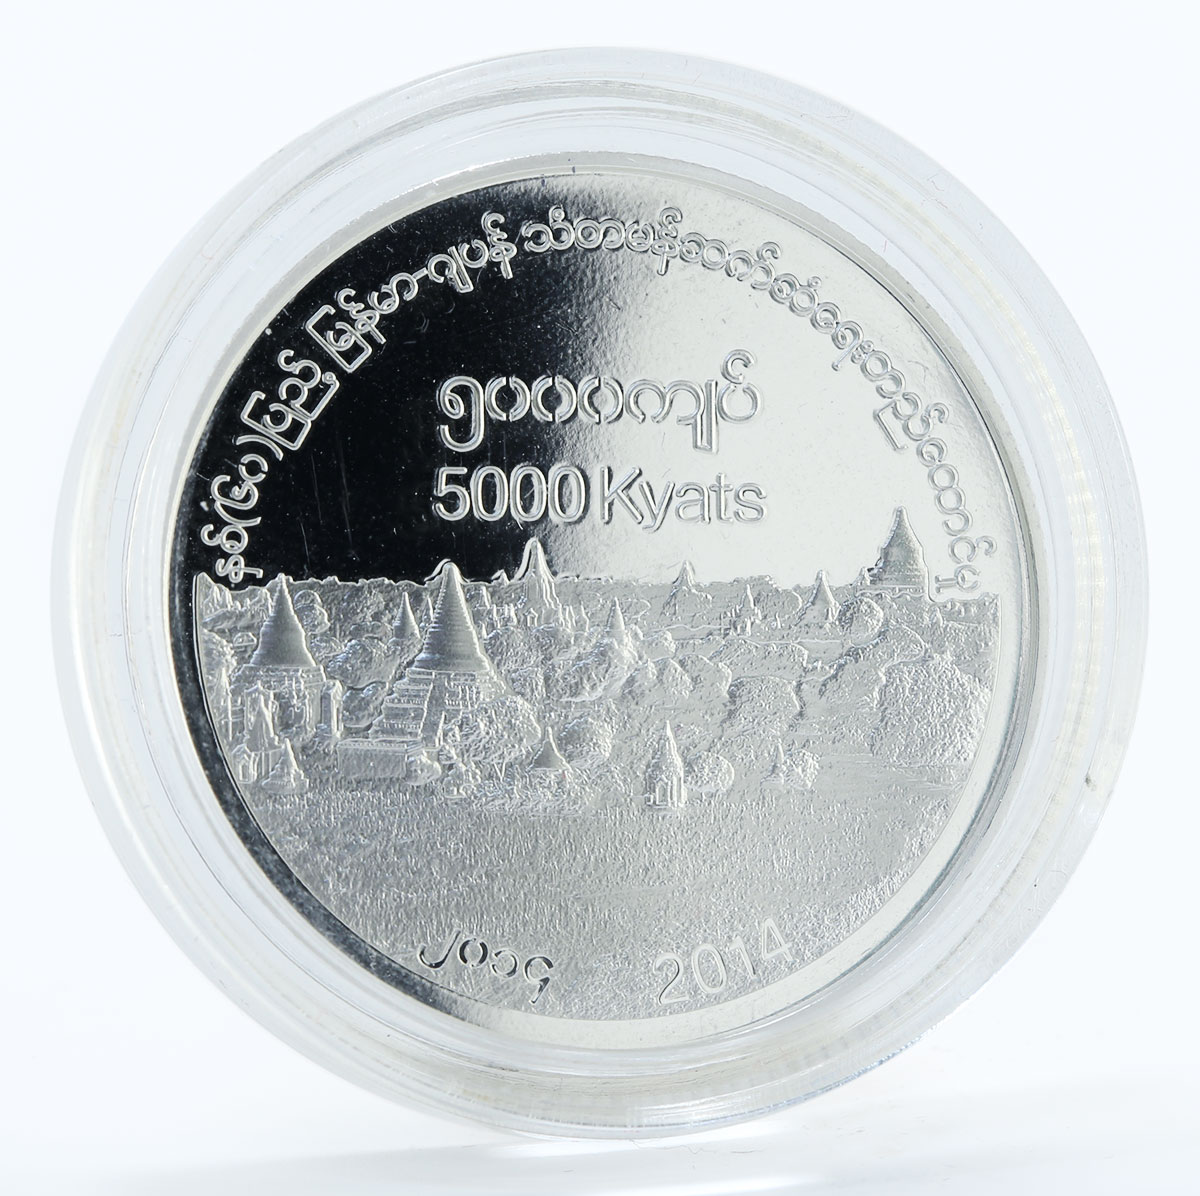 Myanmar 5000 kyats Diplomatic Relations Myanmar and Japan proof silver coin 2014